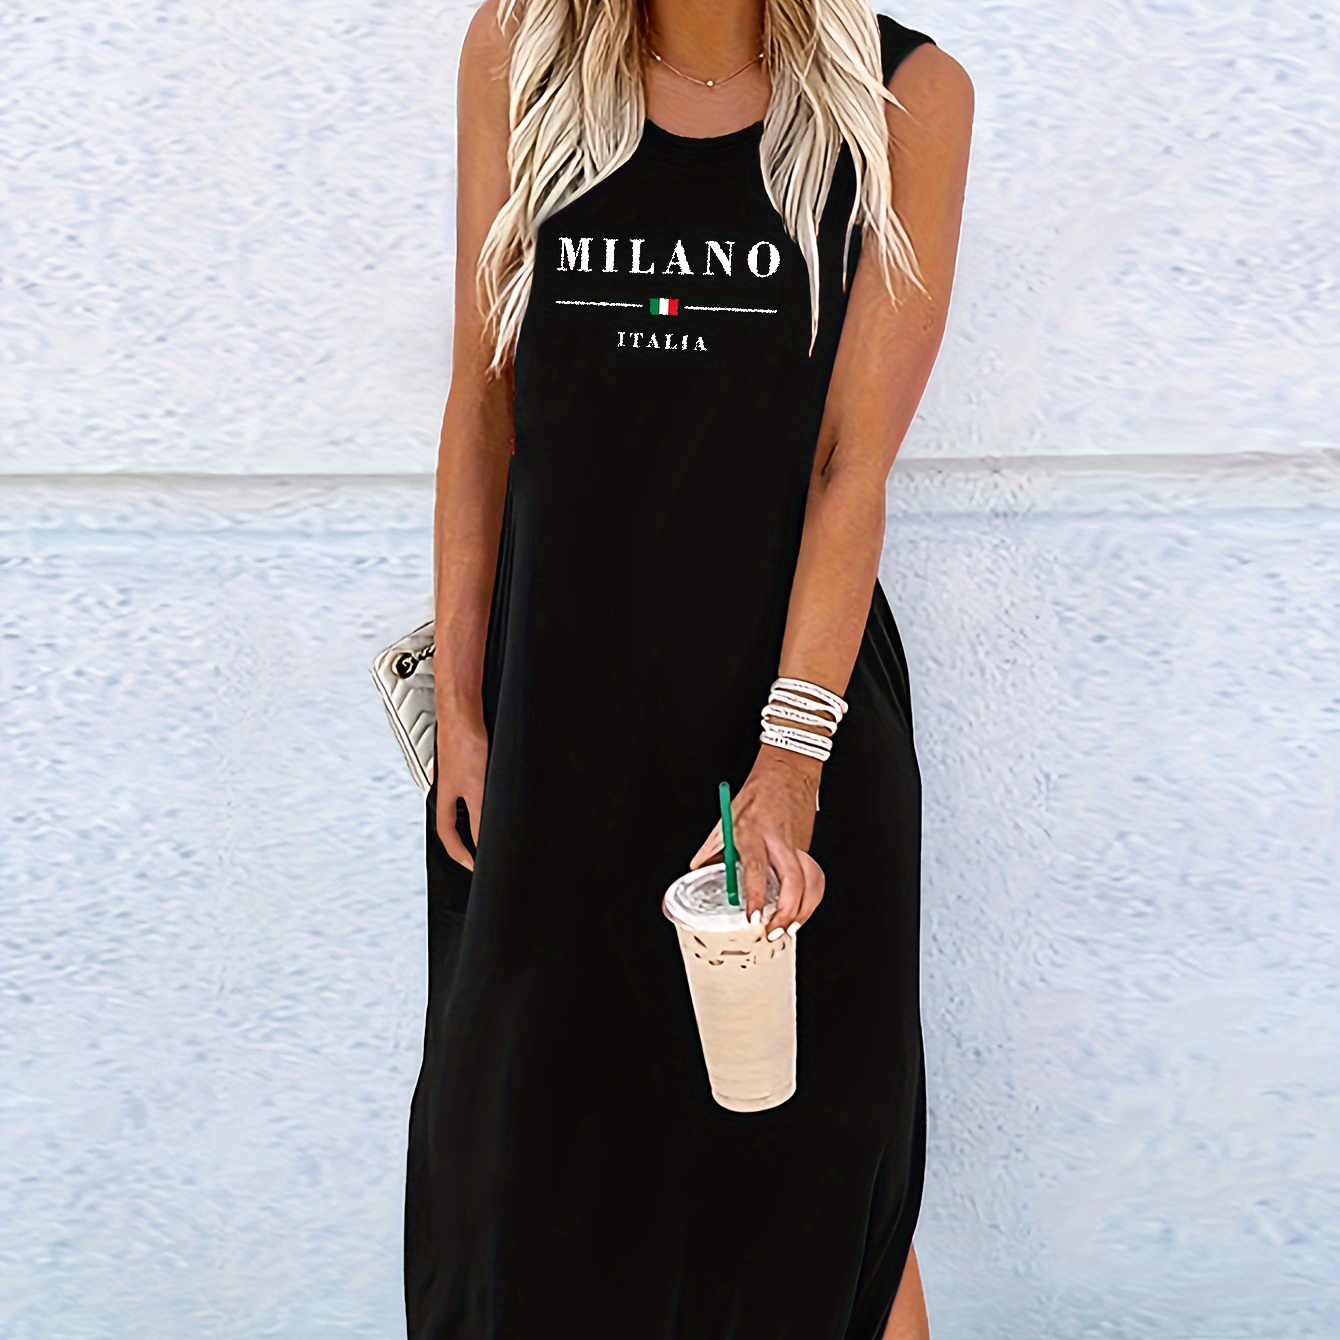 

Milano Print Tank Dress, Casual Crew Neck Sleeveless Dress For Summer, Women's Clothing